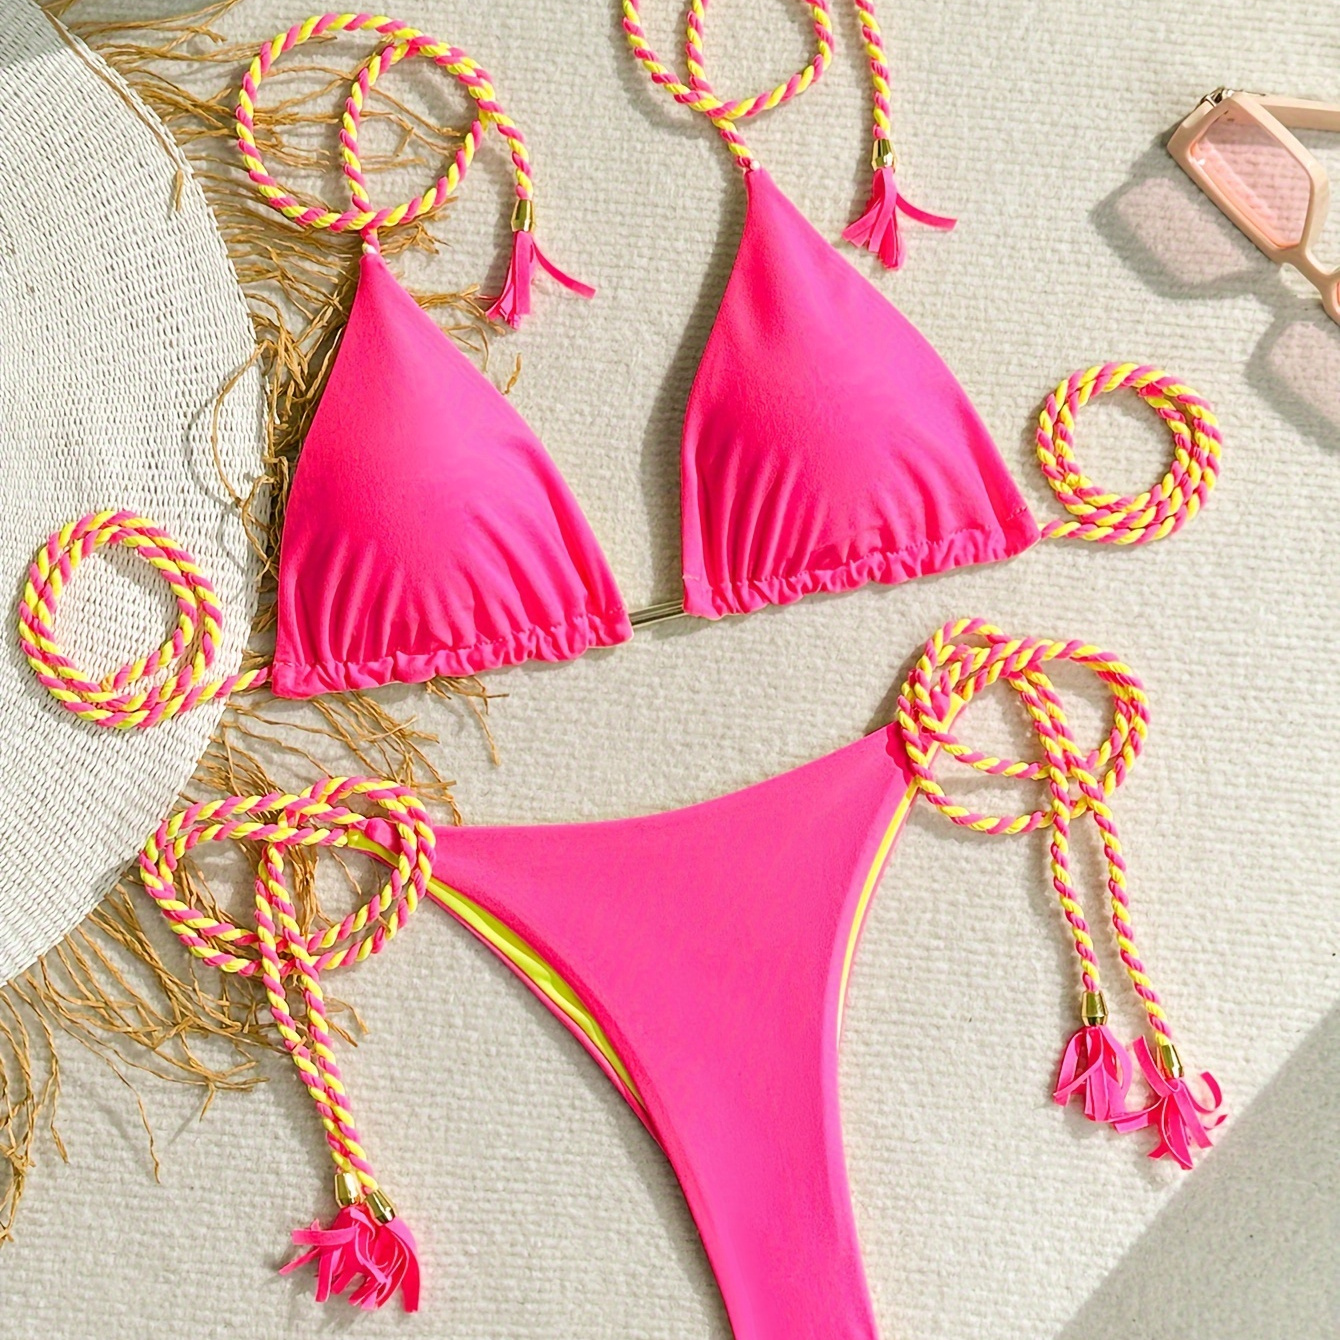 

Women's Sexy Bikini Set, Two-piece Swimwear With Braided Rope Detail, Adjustable Triangle Top & High Cut Bottoms, Summer Beachwear